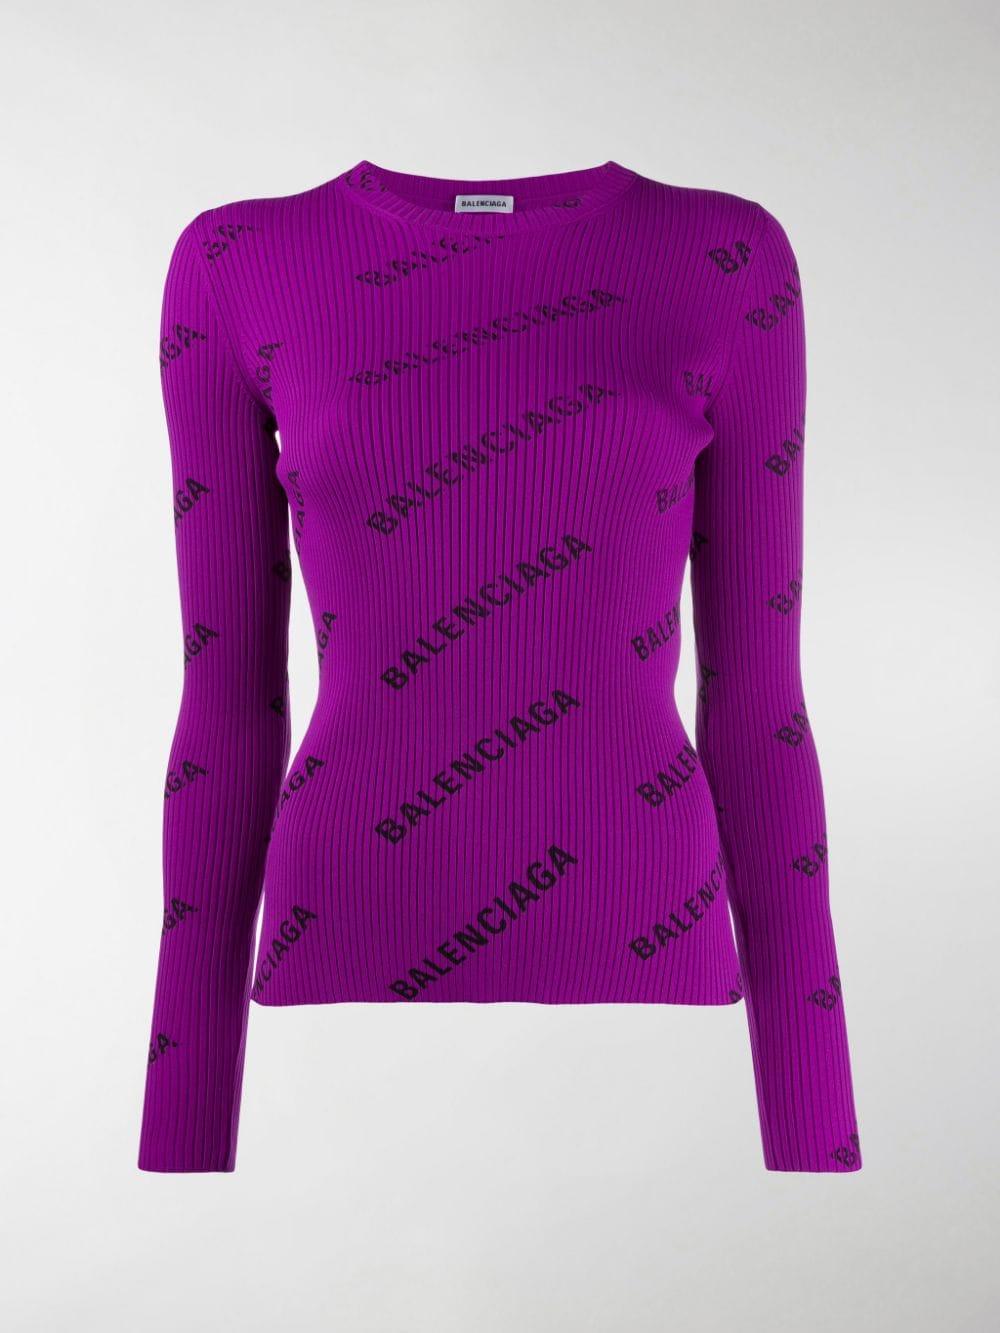 Balenciaga Logo Print Ribbed Sweater in Purple - Lyst